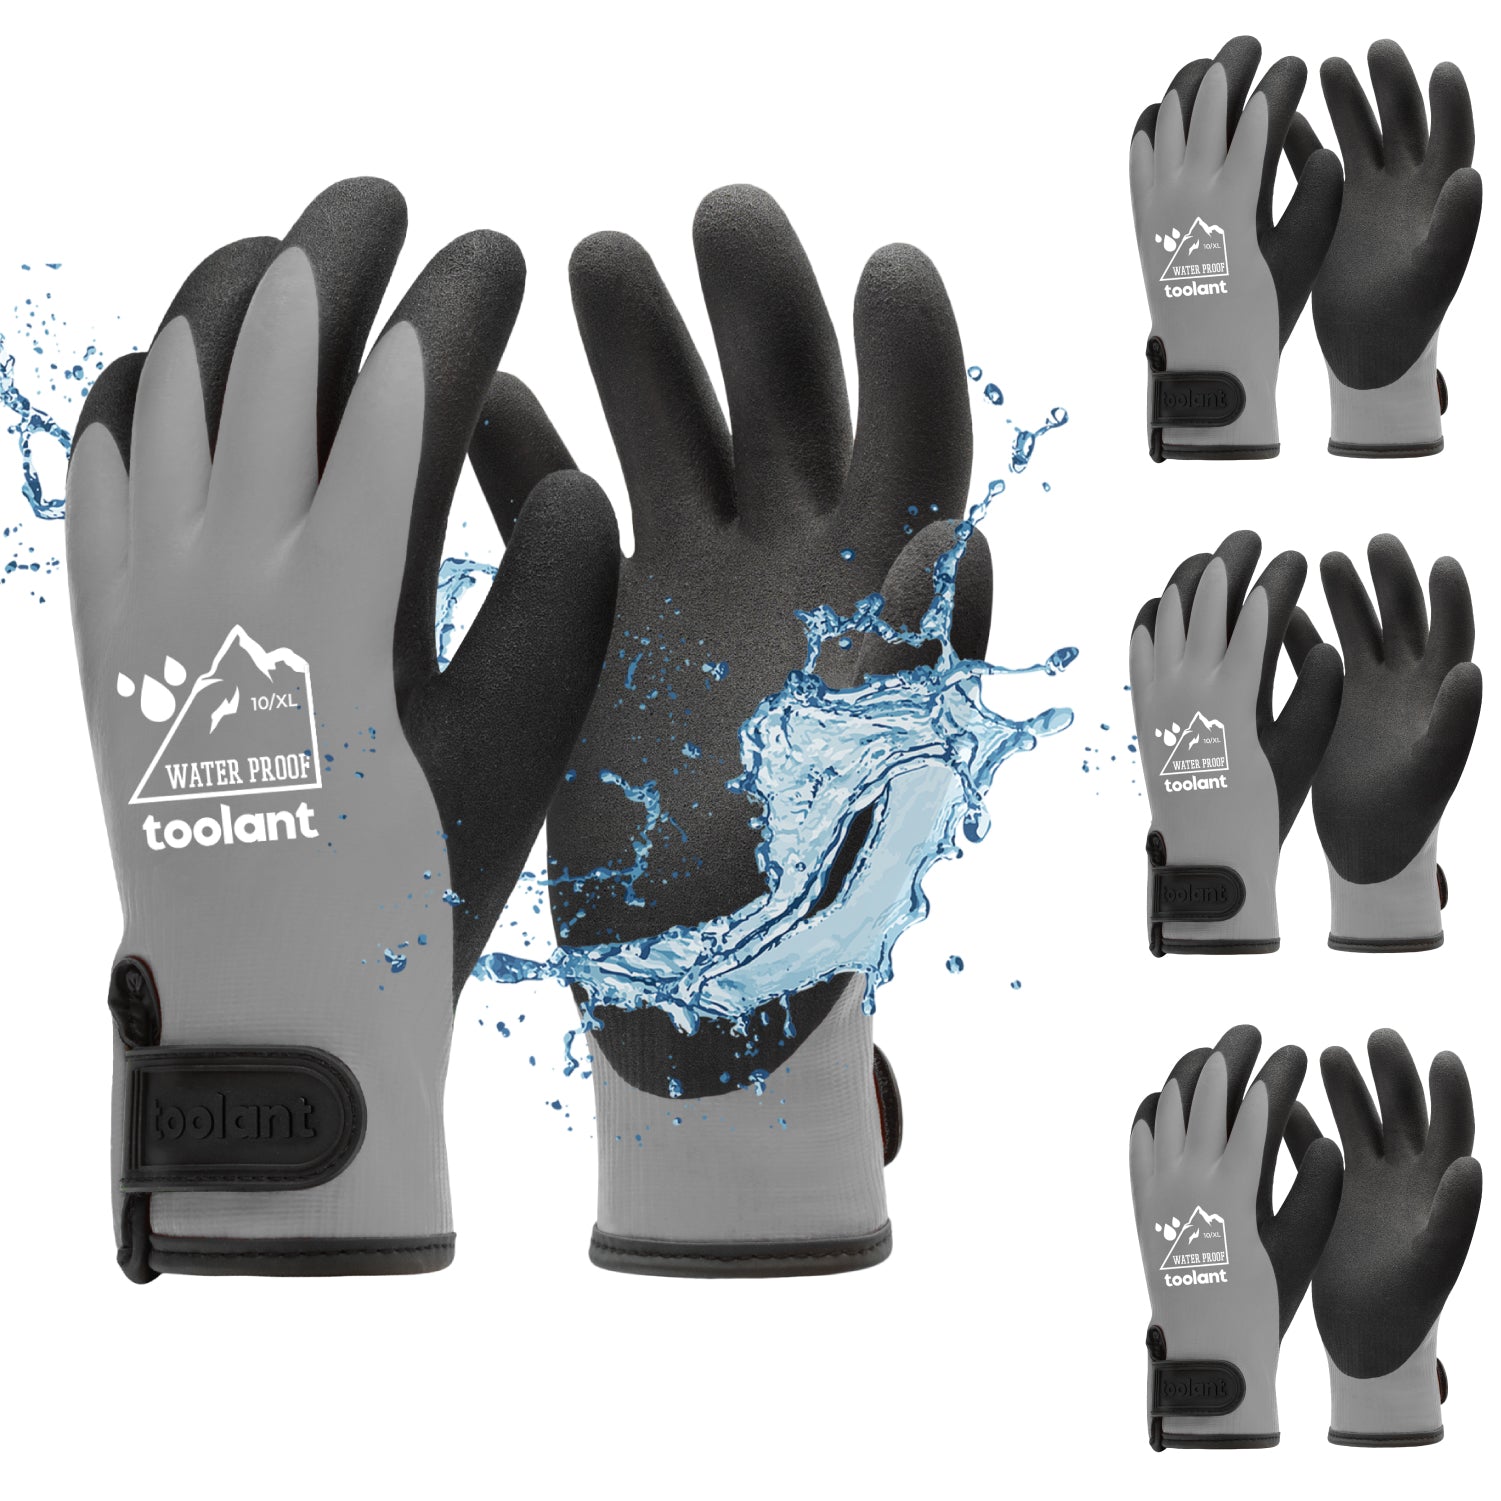 Makita Pro Contractor gloves XL